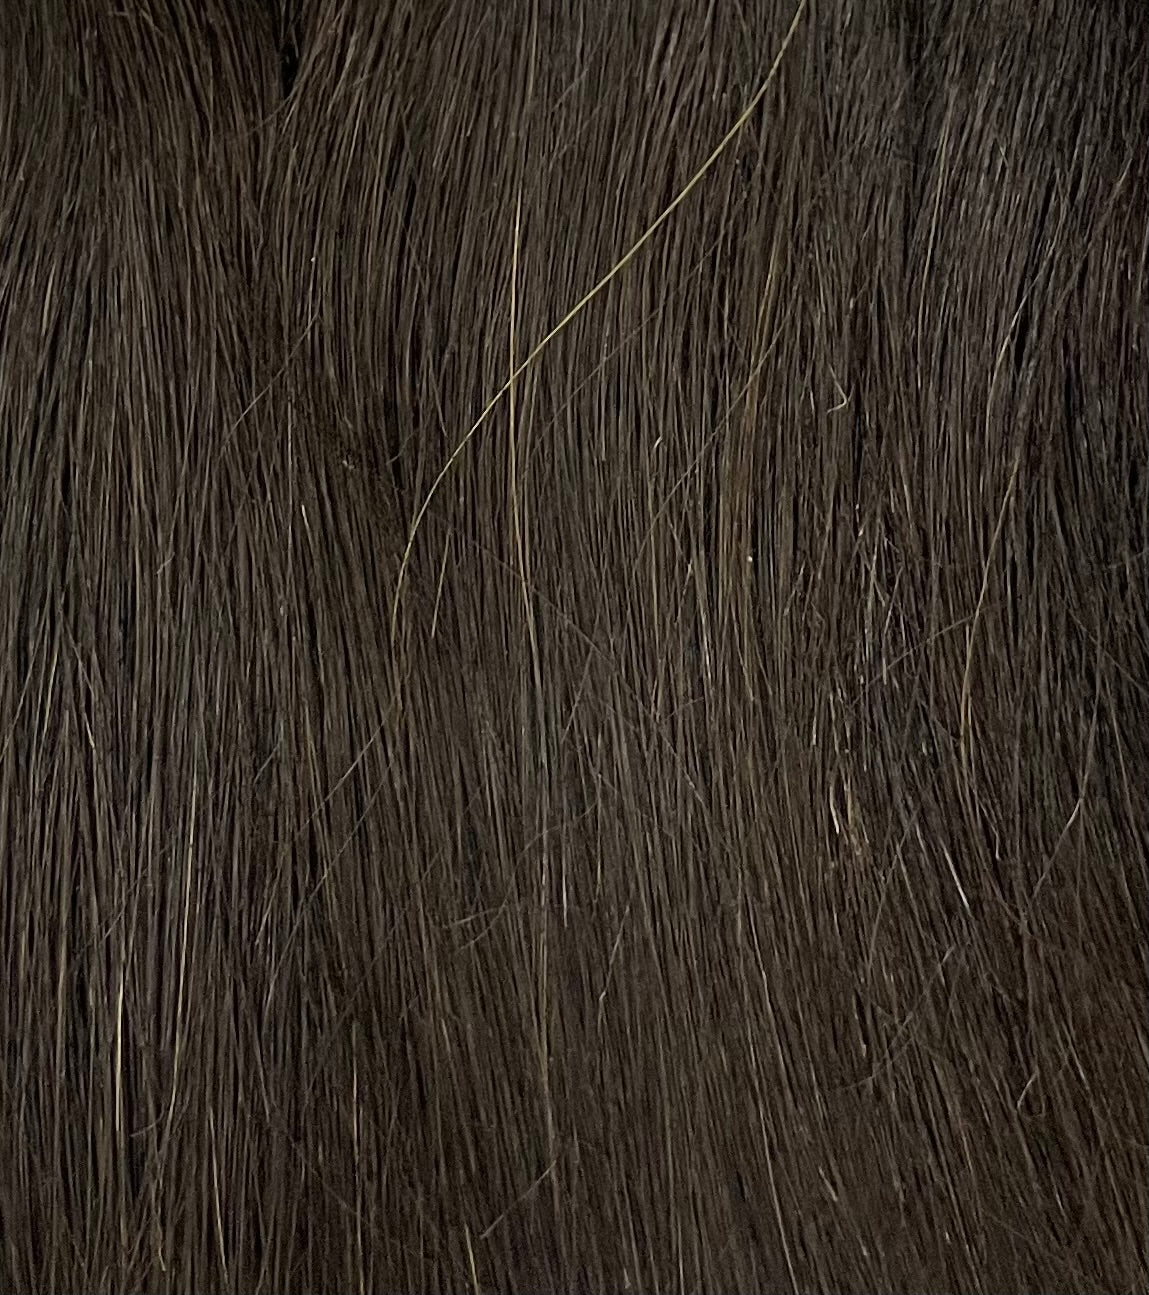 Empire 100% Human Hair by Sensationnel - Yaki Straight (Basic Colors)